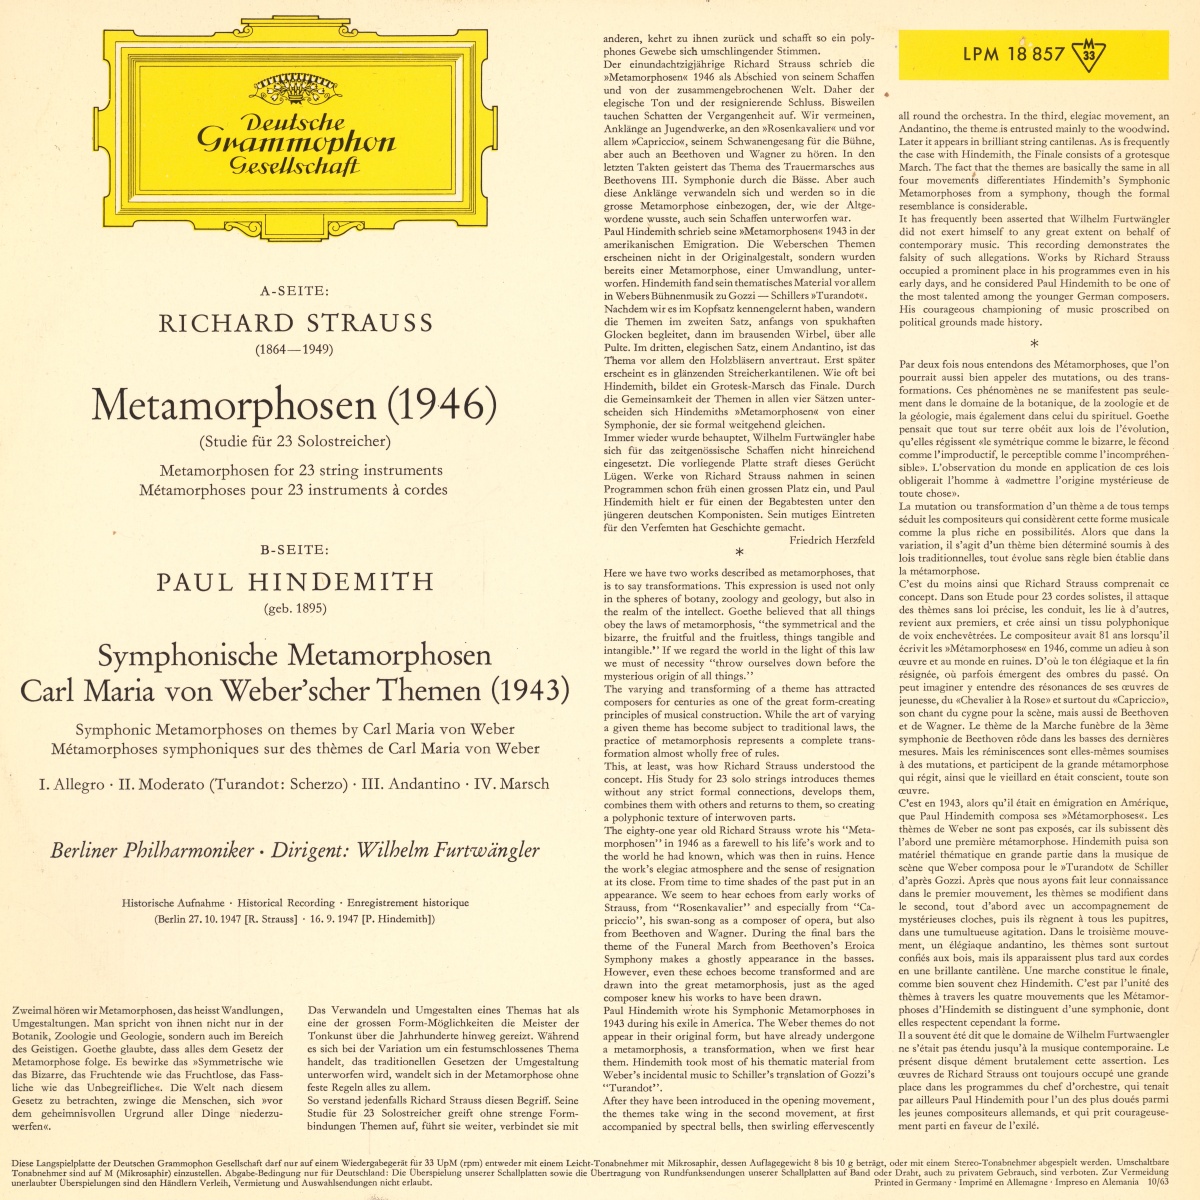 Verso de la pochette du disque Deutsche Grammophone LPM 18 857